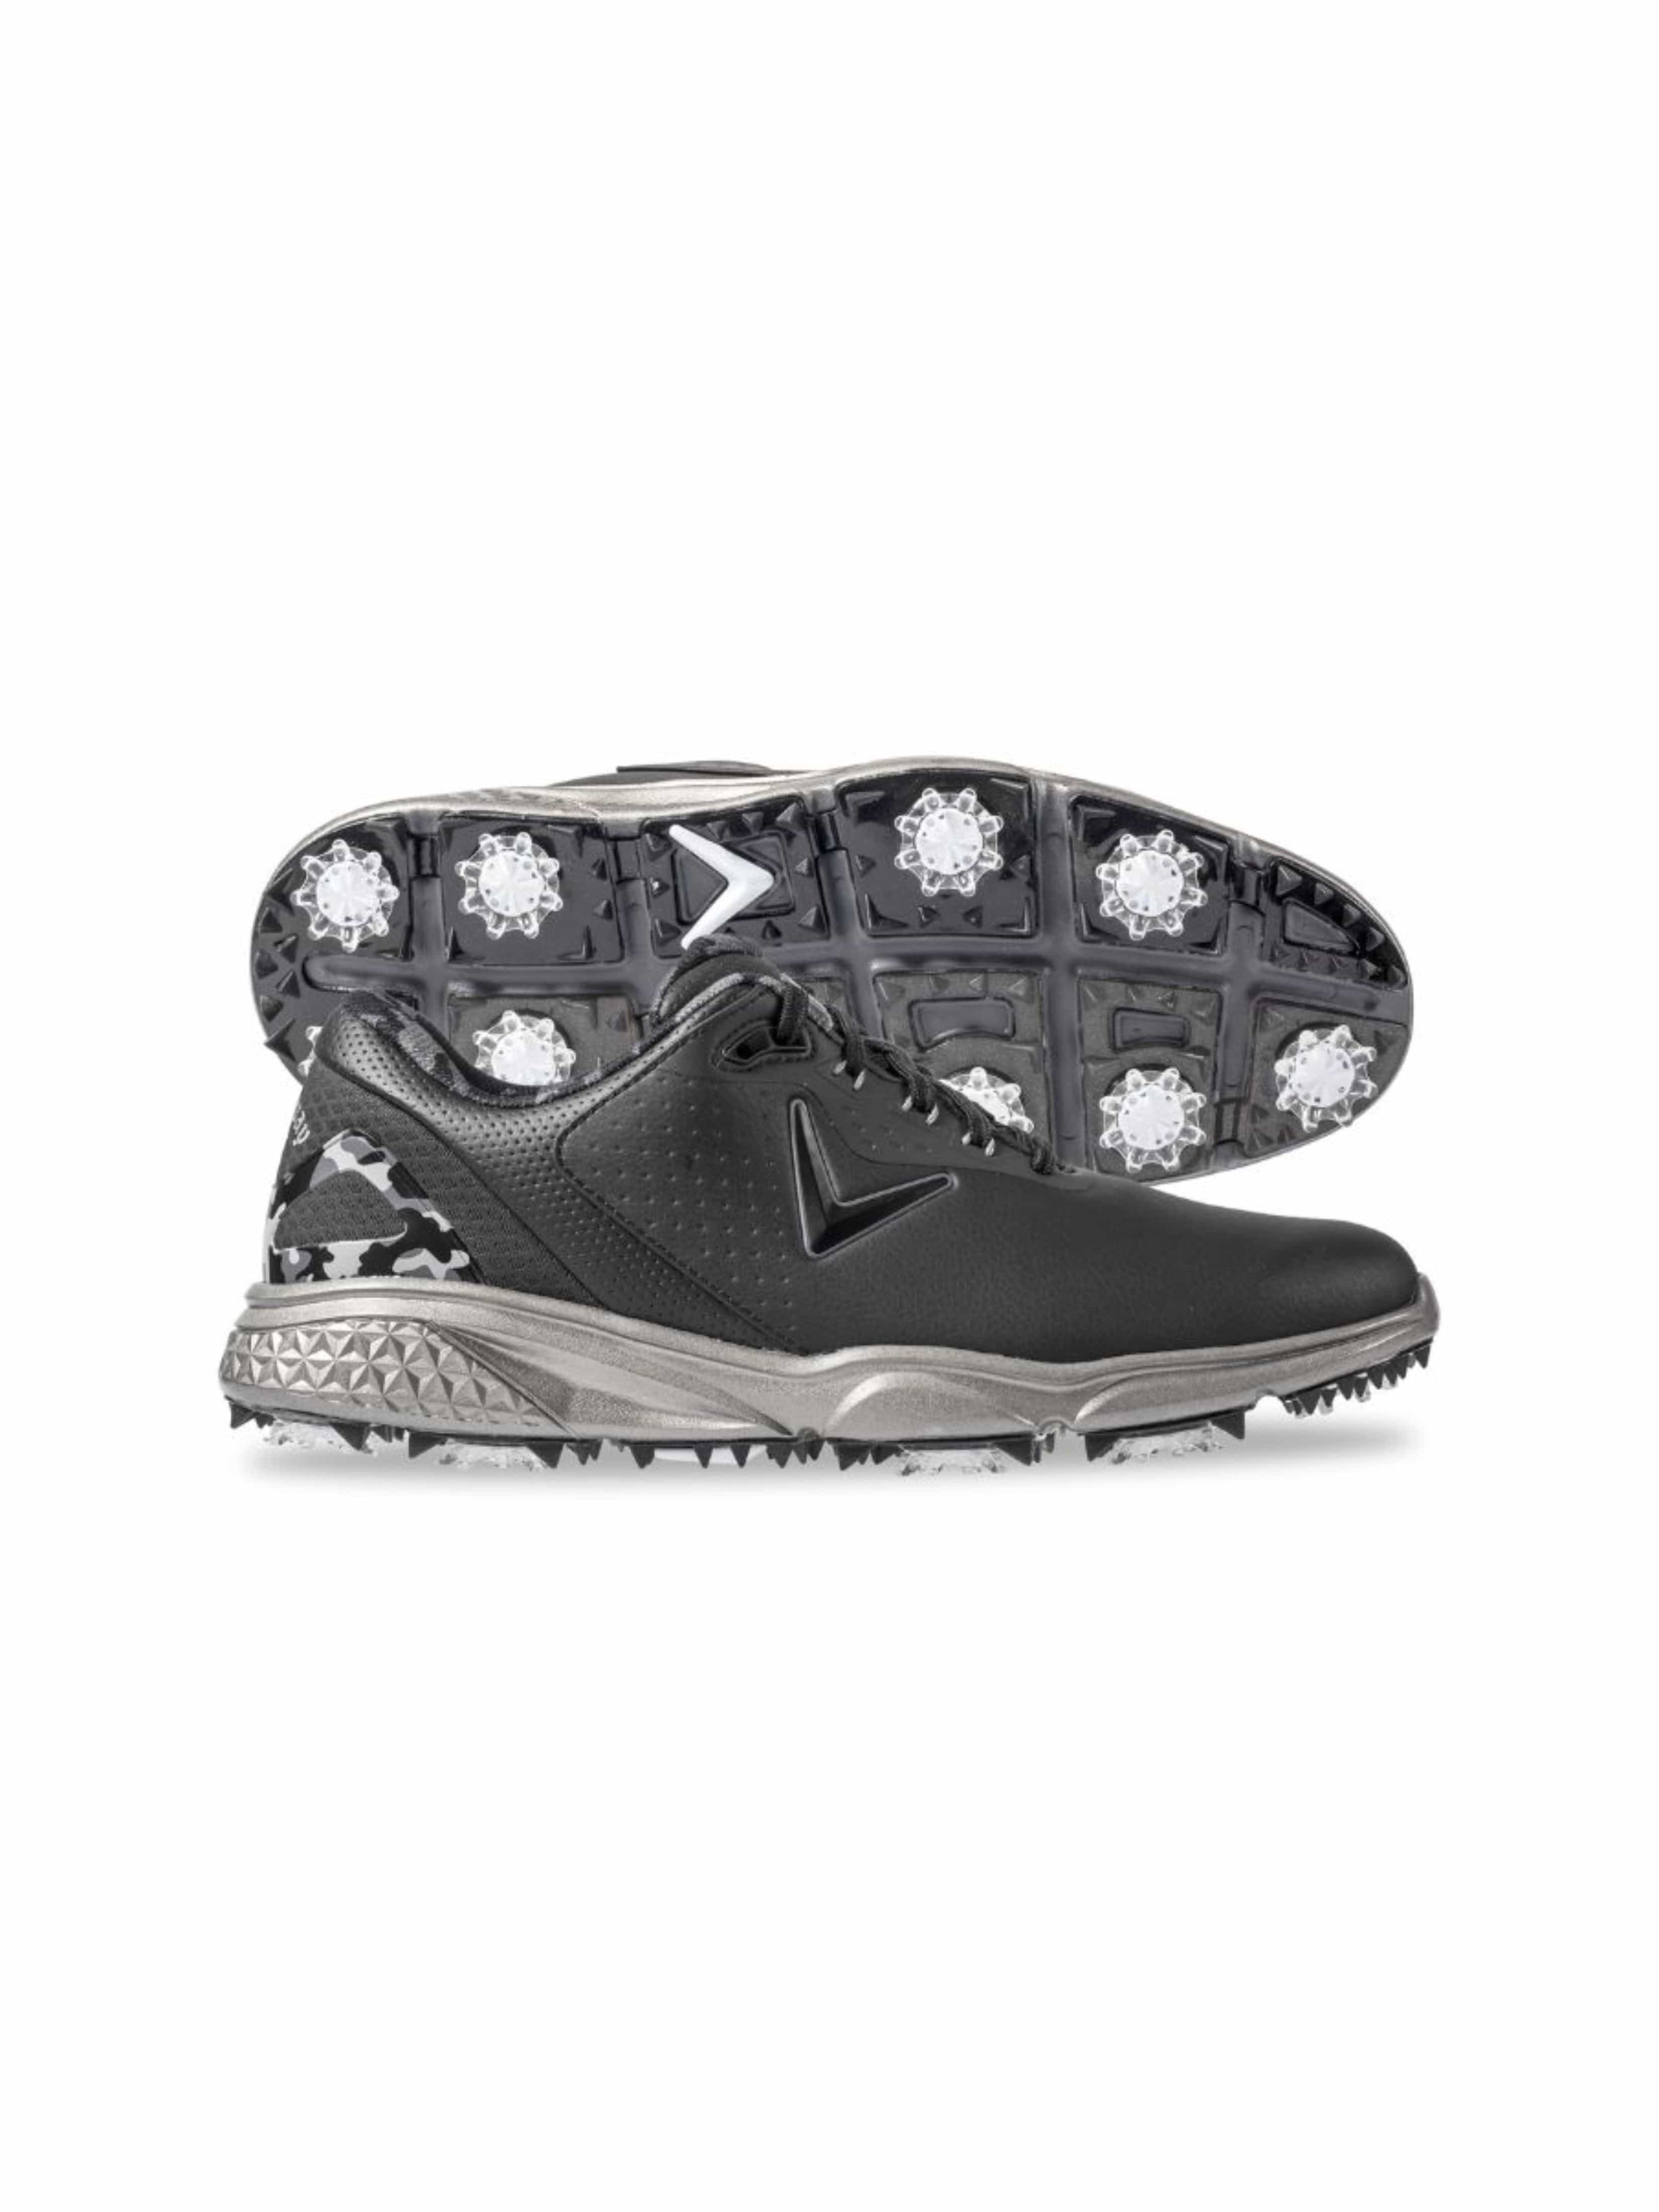 Callaway Apparel Mens Coronado V2 Golf Shoes, Size 13, Black, Polyurethane/Nylon | Golf Apparel Shop